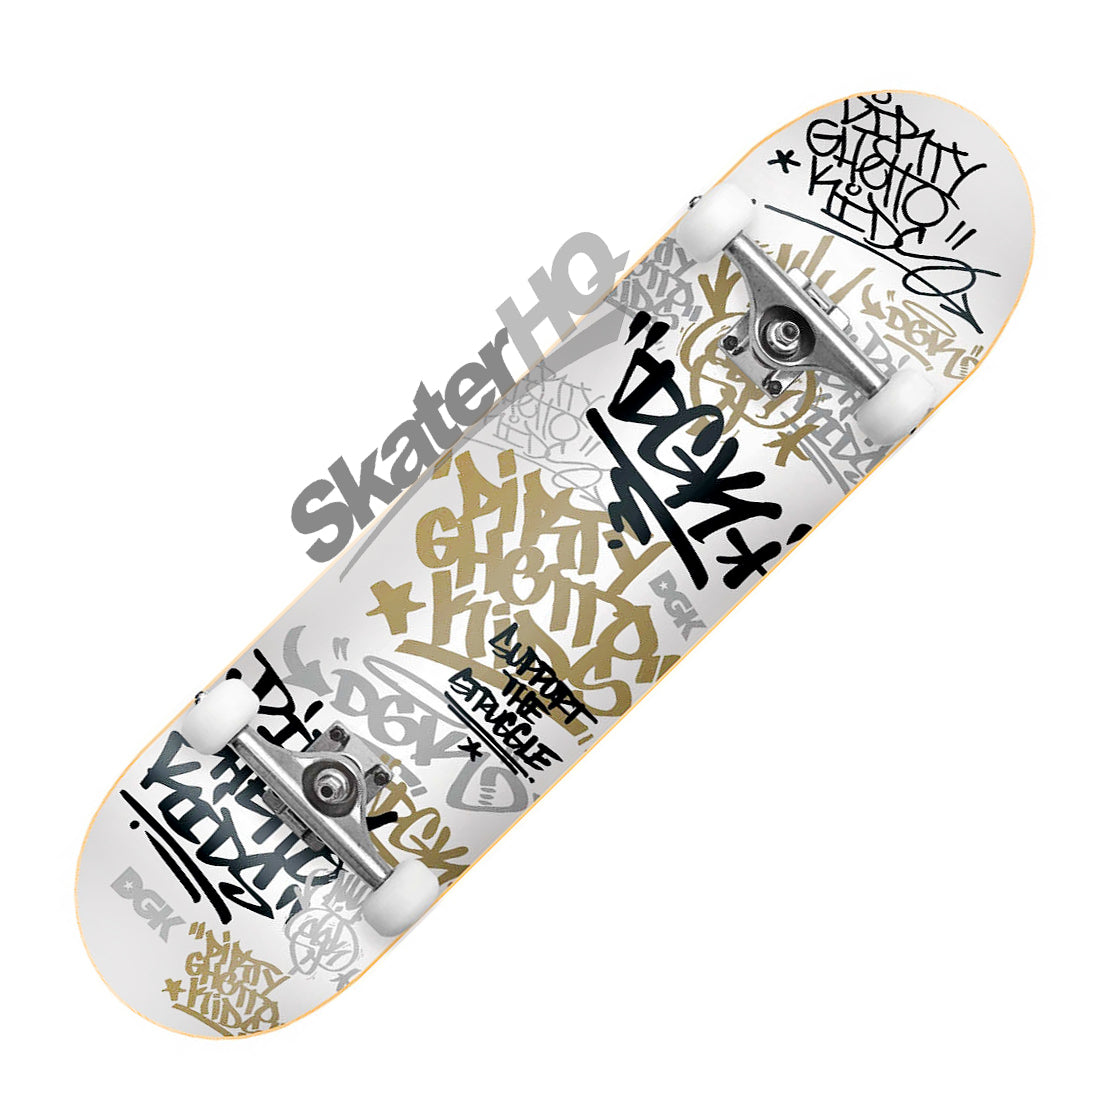 DGK Tag 7.5 Complete - White/Gold Skateboard Completes Modern Street